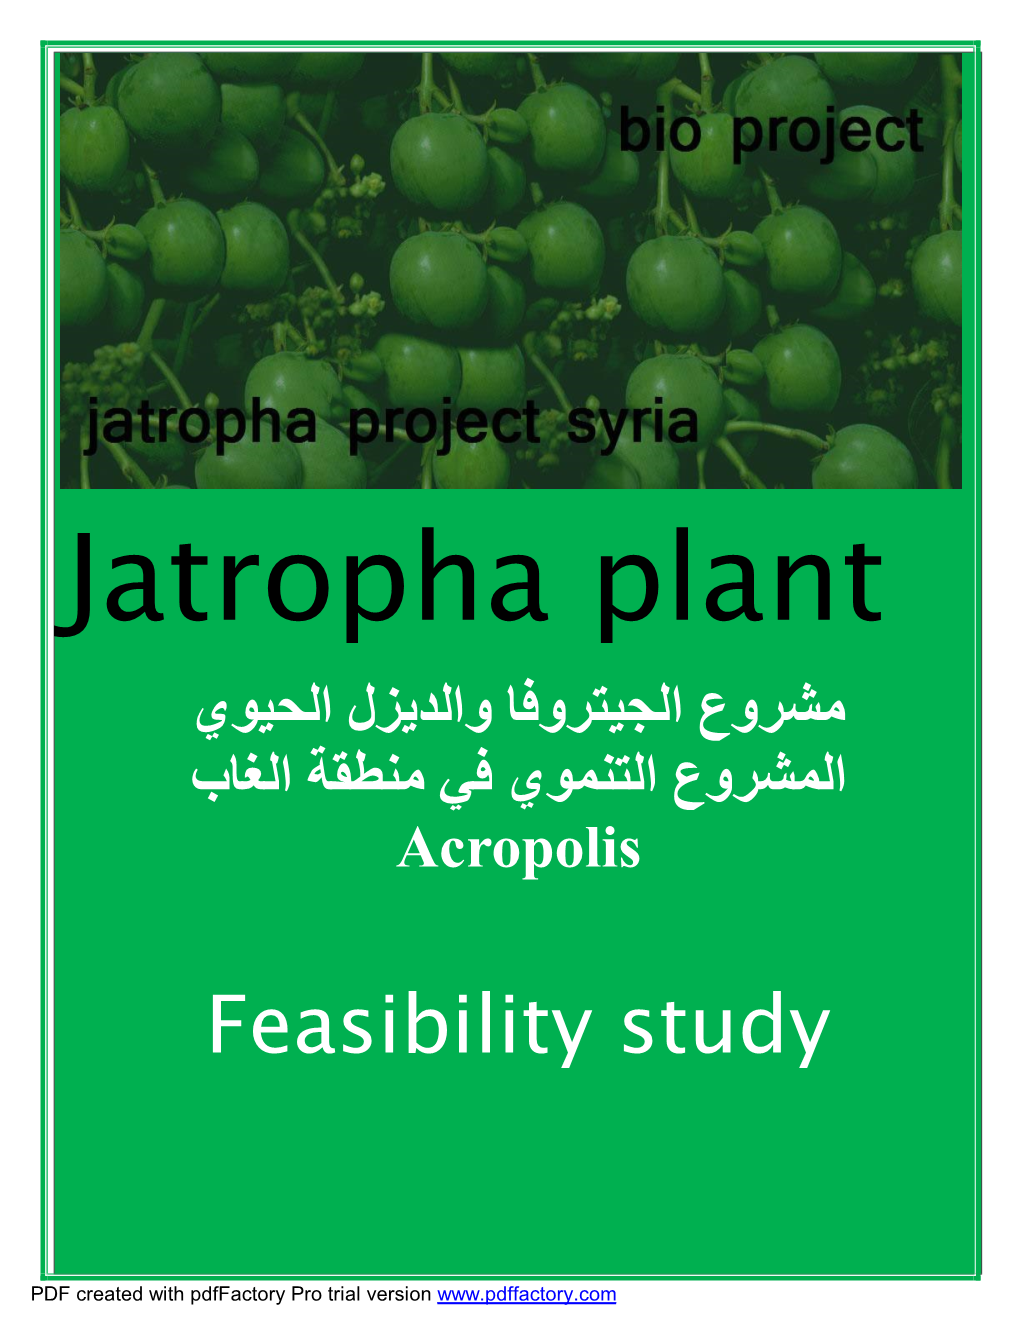 Jatropha Plant ﻣﺸﺮوع اﻟﺠﯿﺘﺮوﻓﺎ واﻟﺪﯾﺰل اﻟﺤﯿﻮي اﻟﻤﺸﺮوع اﻟﺘﻨﻤﻮي ﻓﻲ ﻣﻨﻄﻘﺔ اﻟﻐﺎب Acropolis